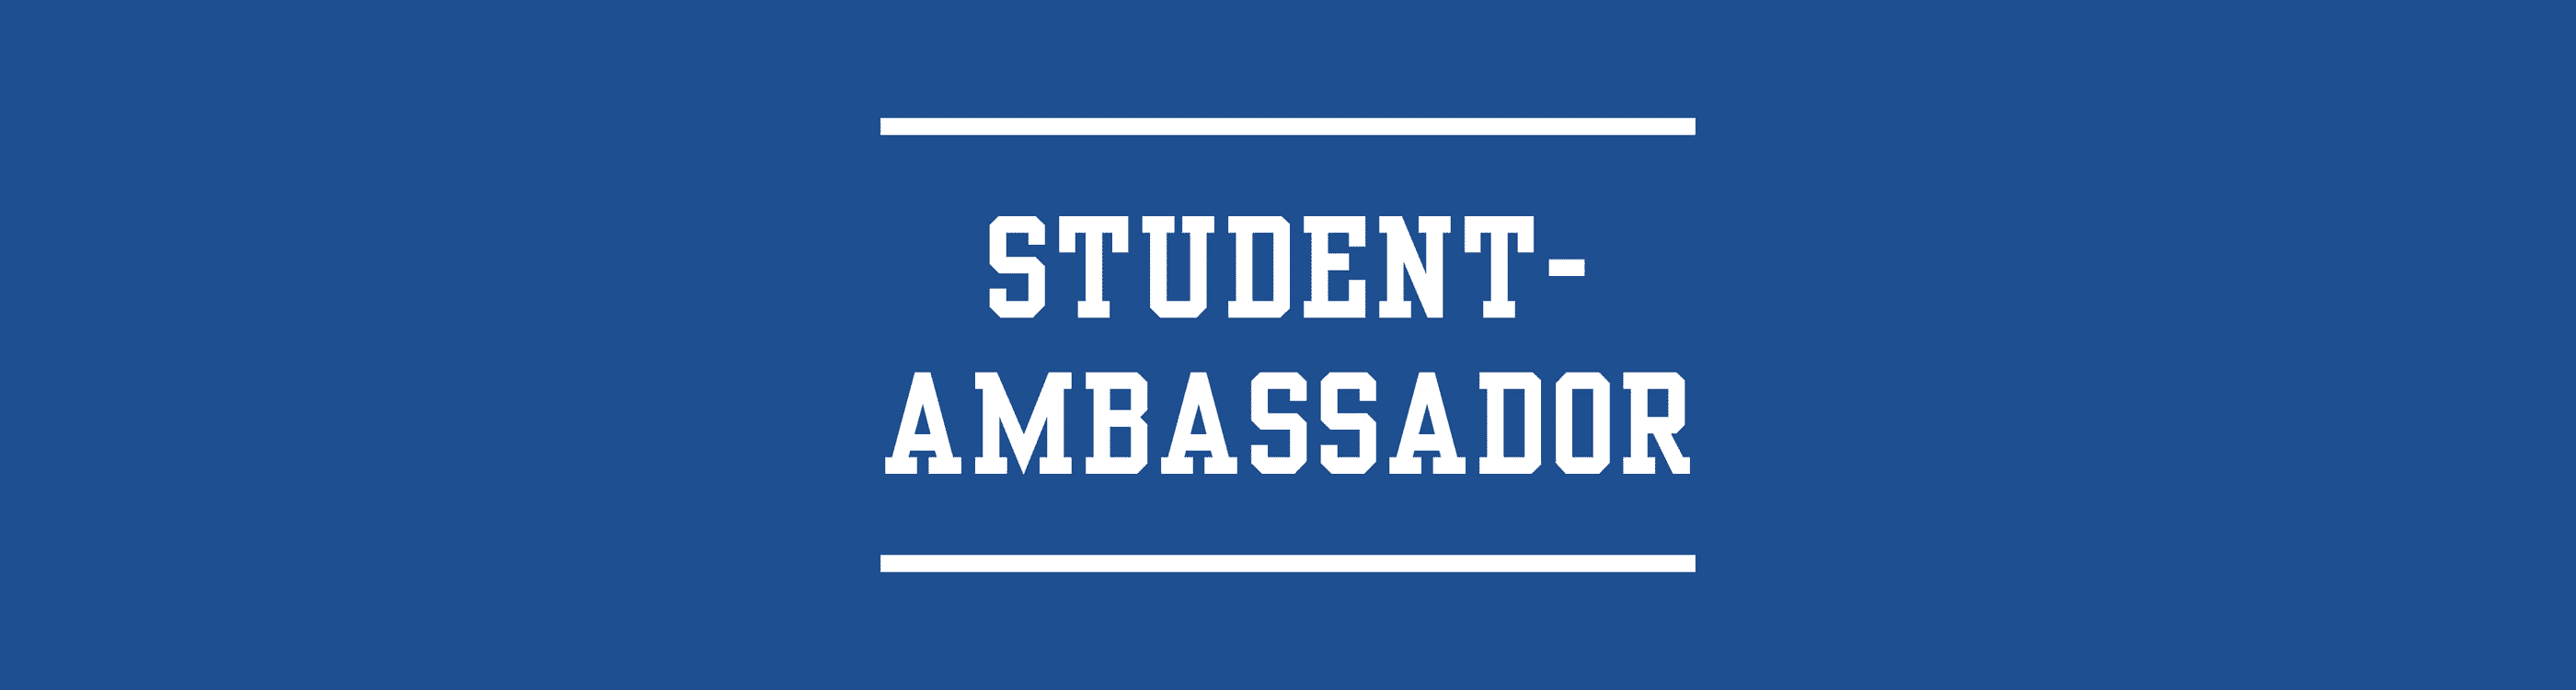 Student Ambassadors